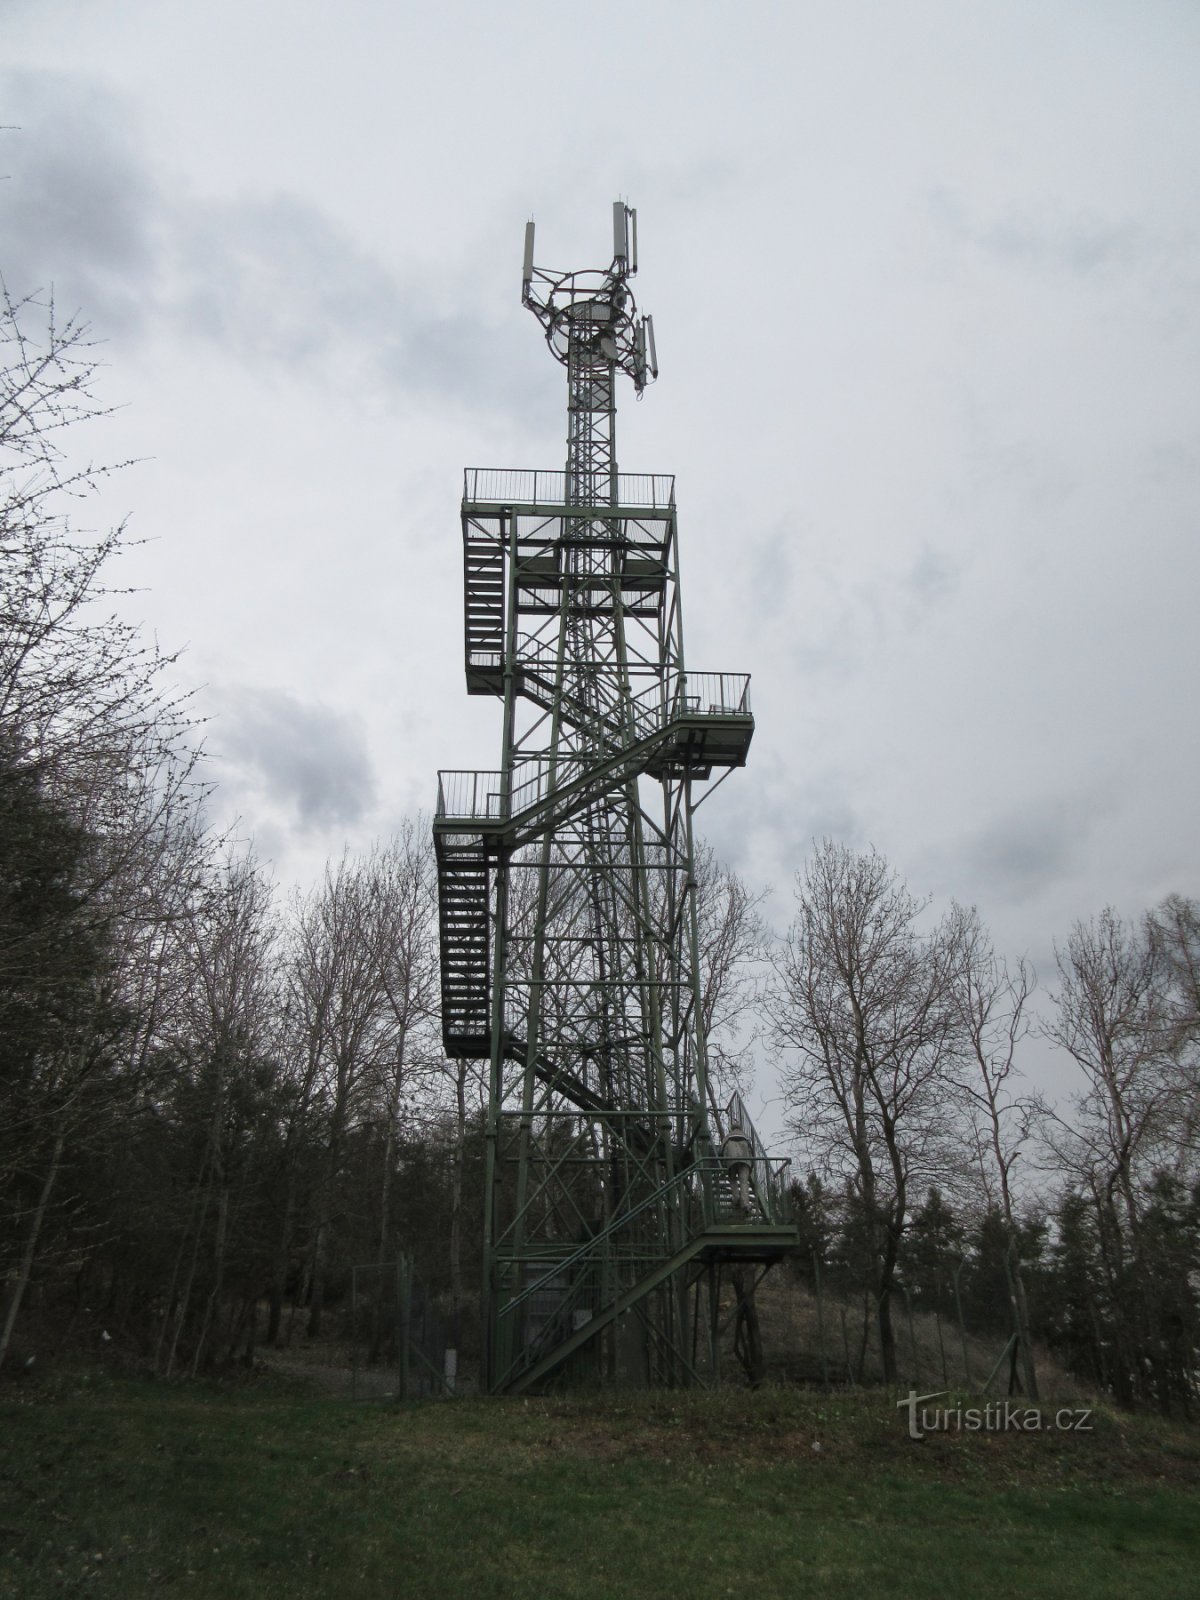 Cerhovice - смотровая башня Třenická hora